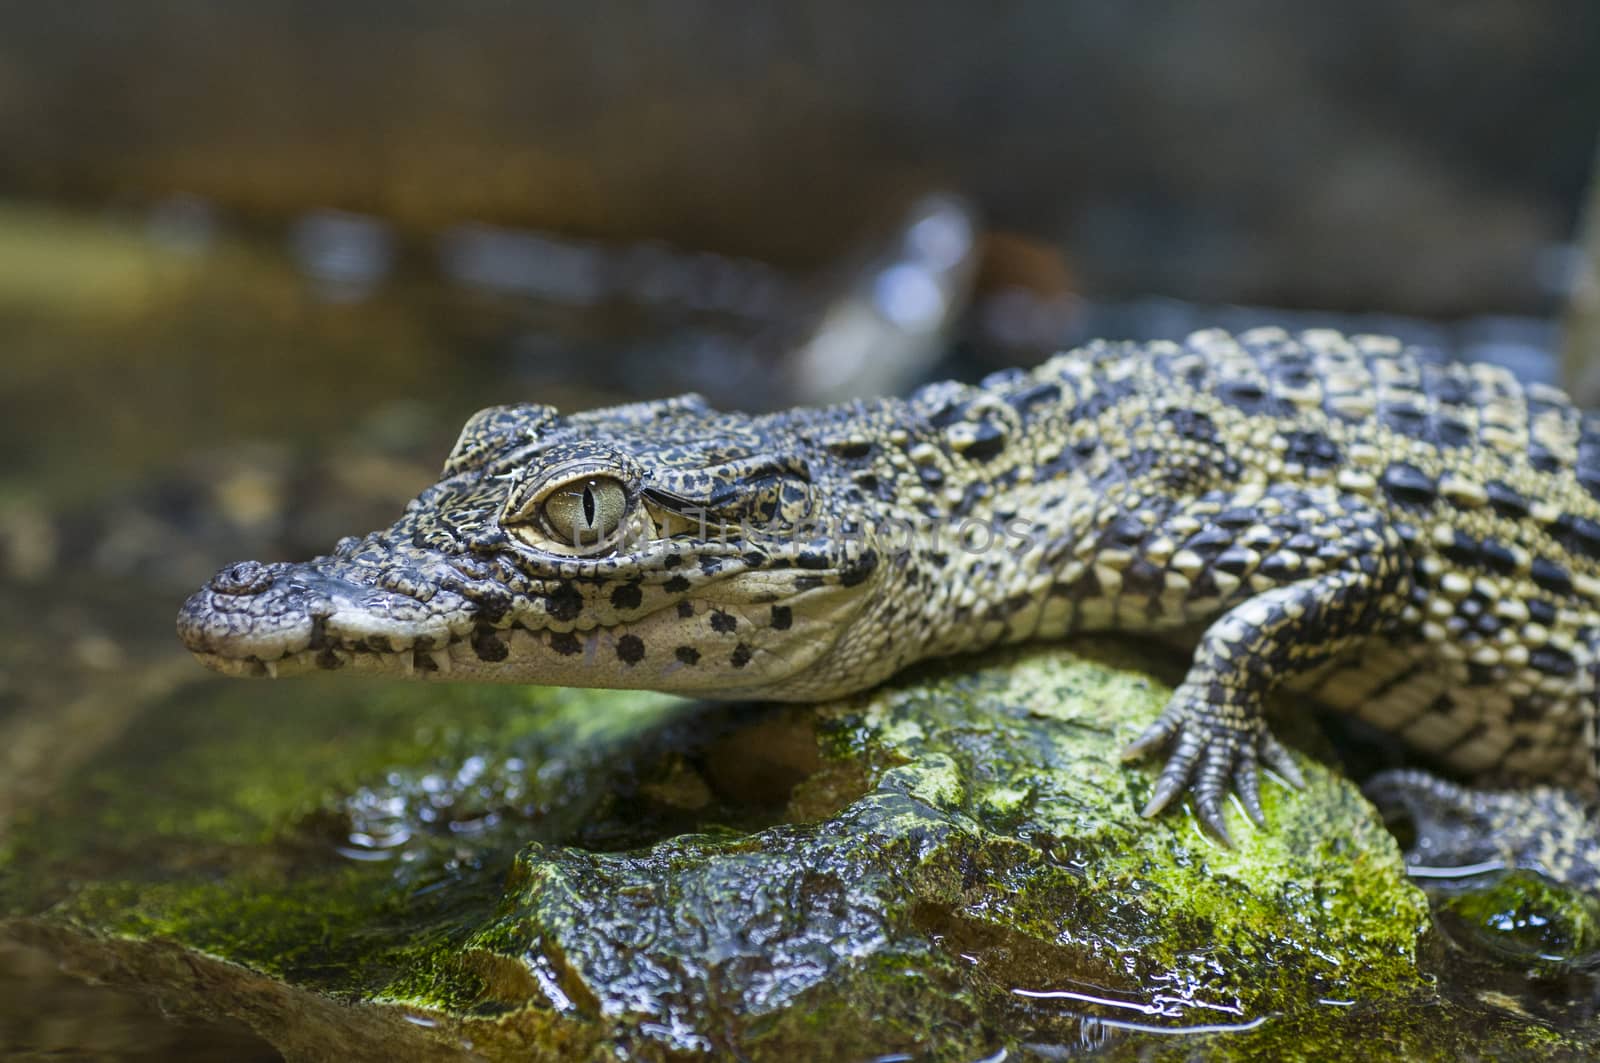 Captive baby nile crocodile (Crocodylus niloticus) by Njean